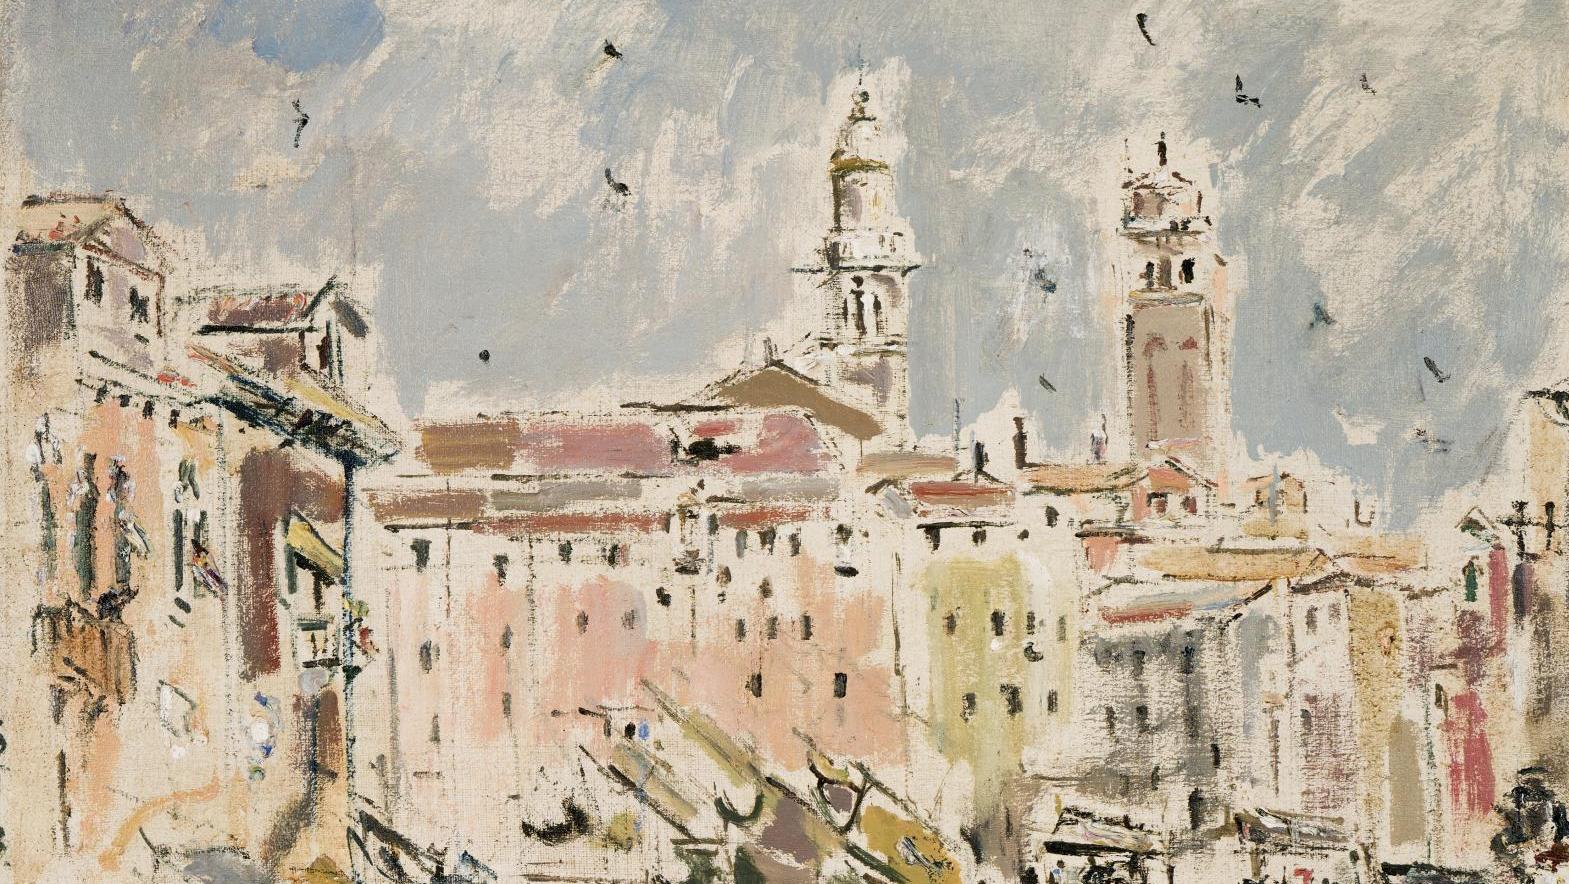 Filippo de Pisis (1896-1956), Campo Santa Margherita, Venise, 1947, huile sur toile,... Filippo de Pisis, de Venise à Londres